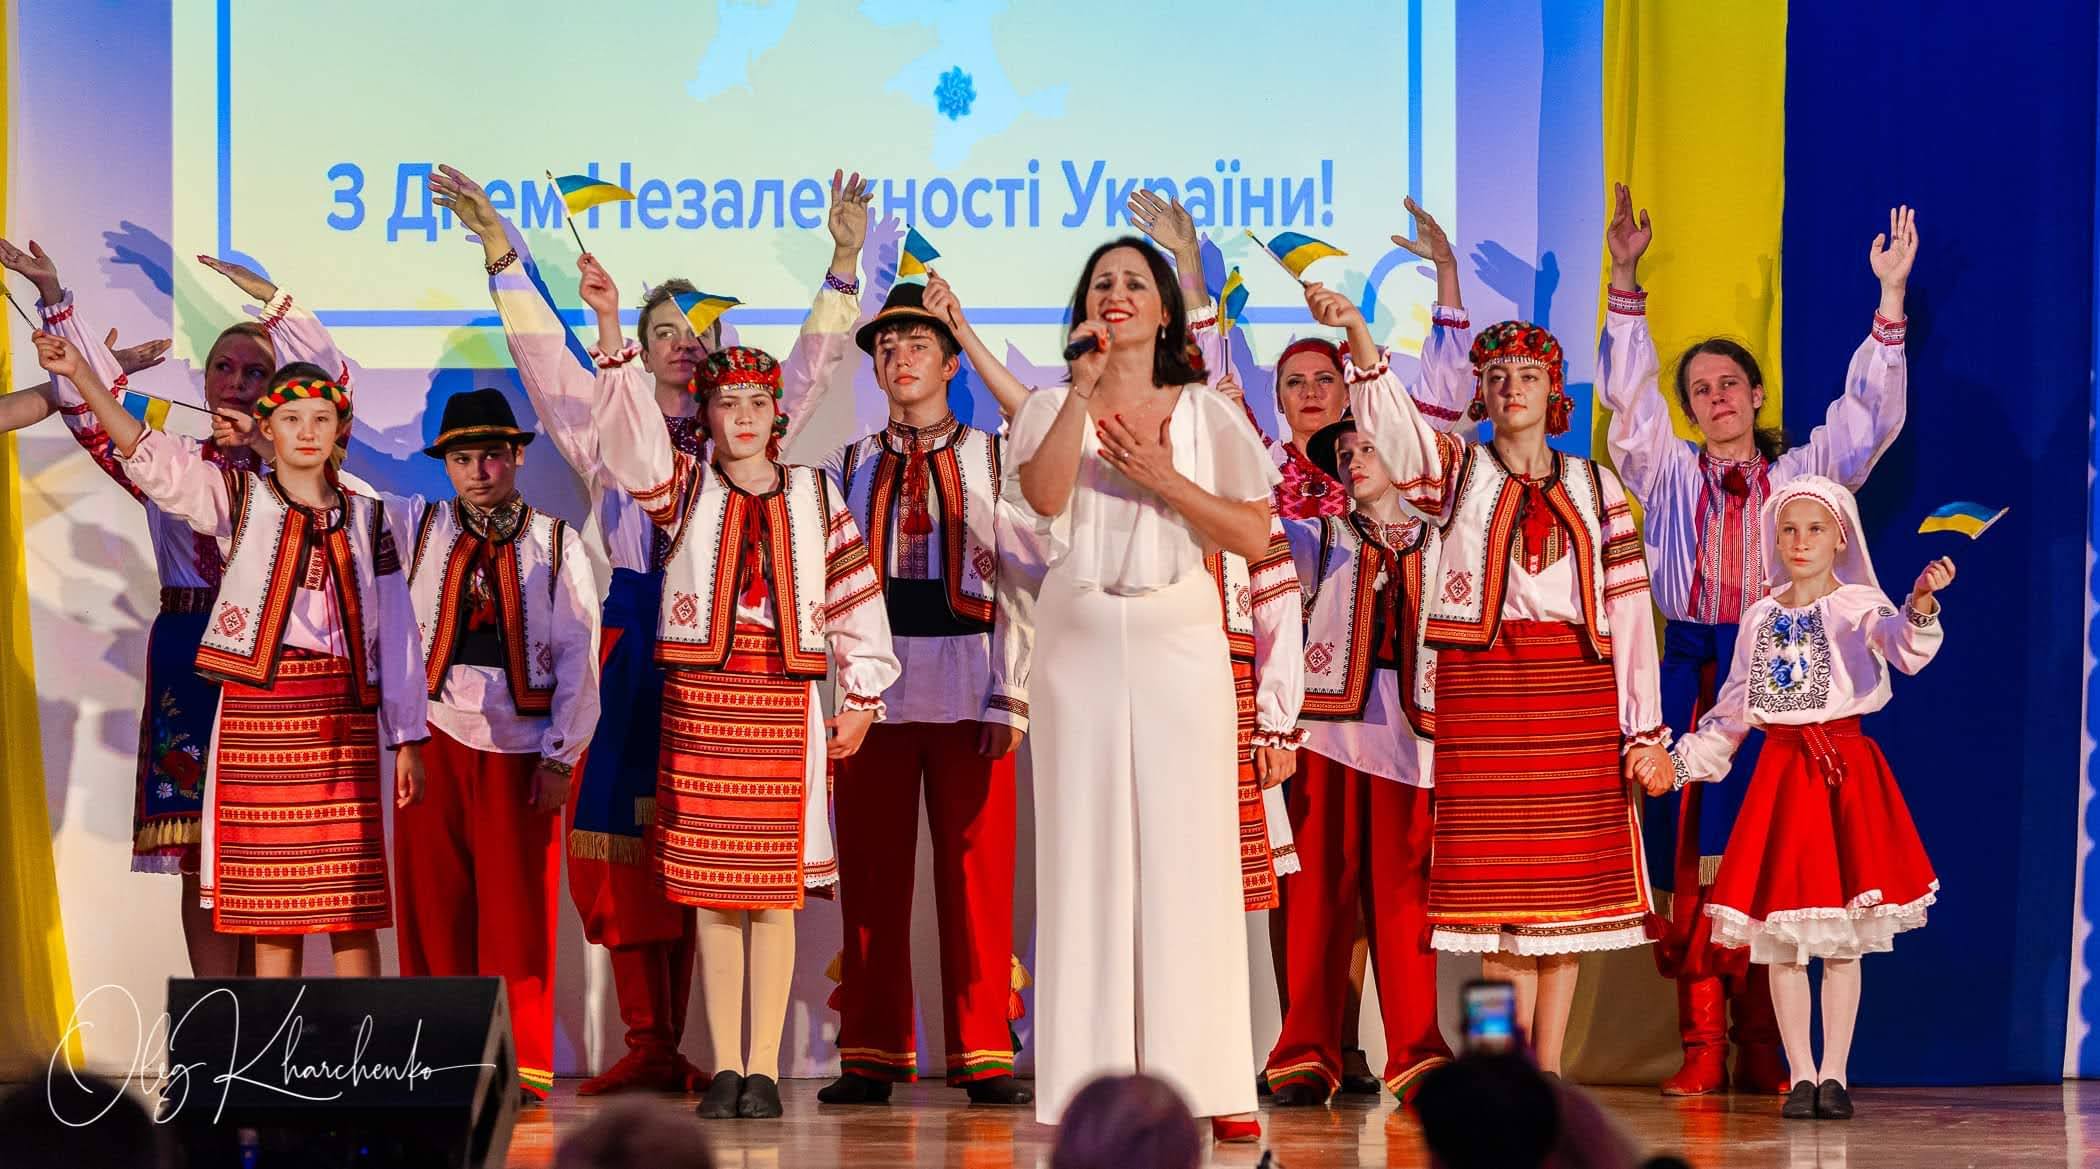 Song "Raduysya Zemlya" (Earth Rejoice) written and performed by Asya Gorska with Margaryta Kuzina